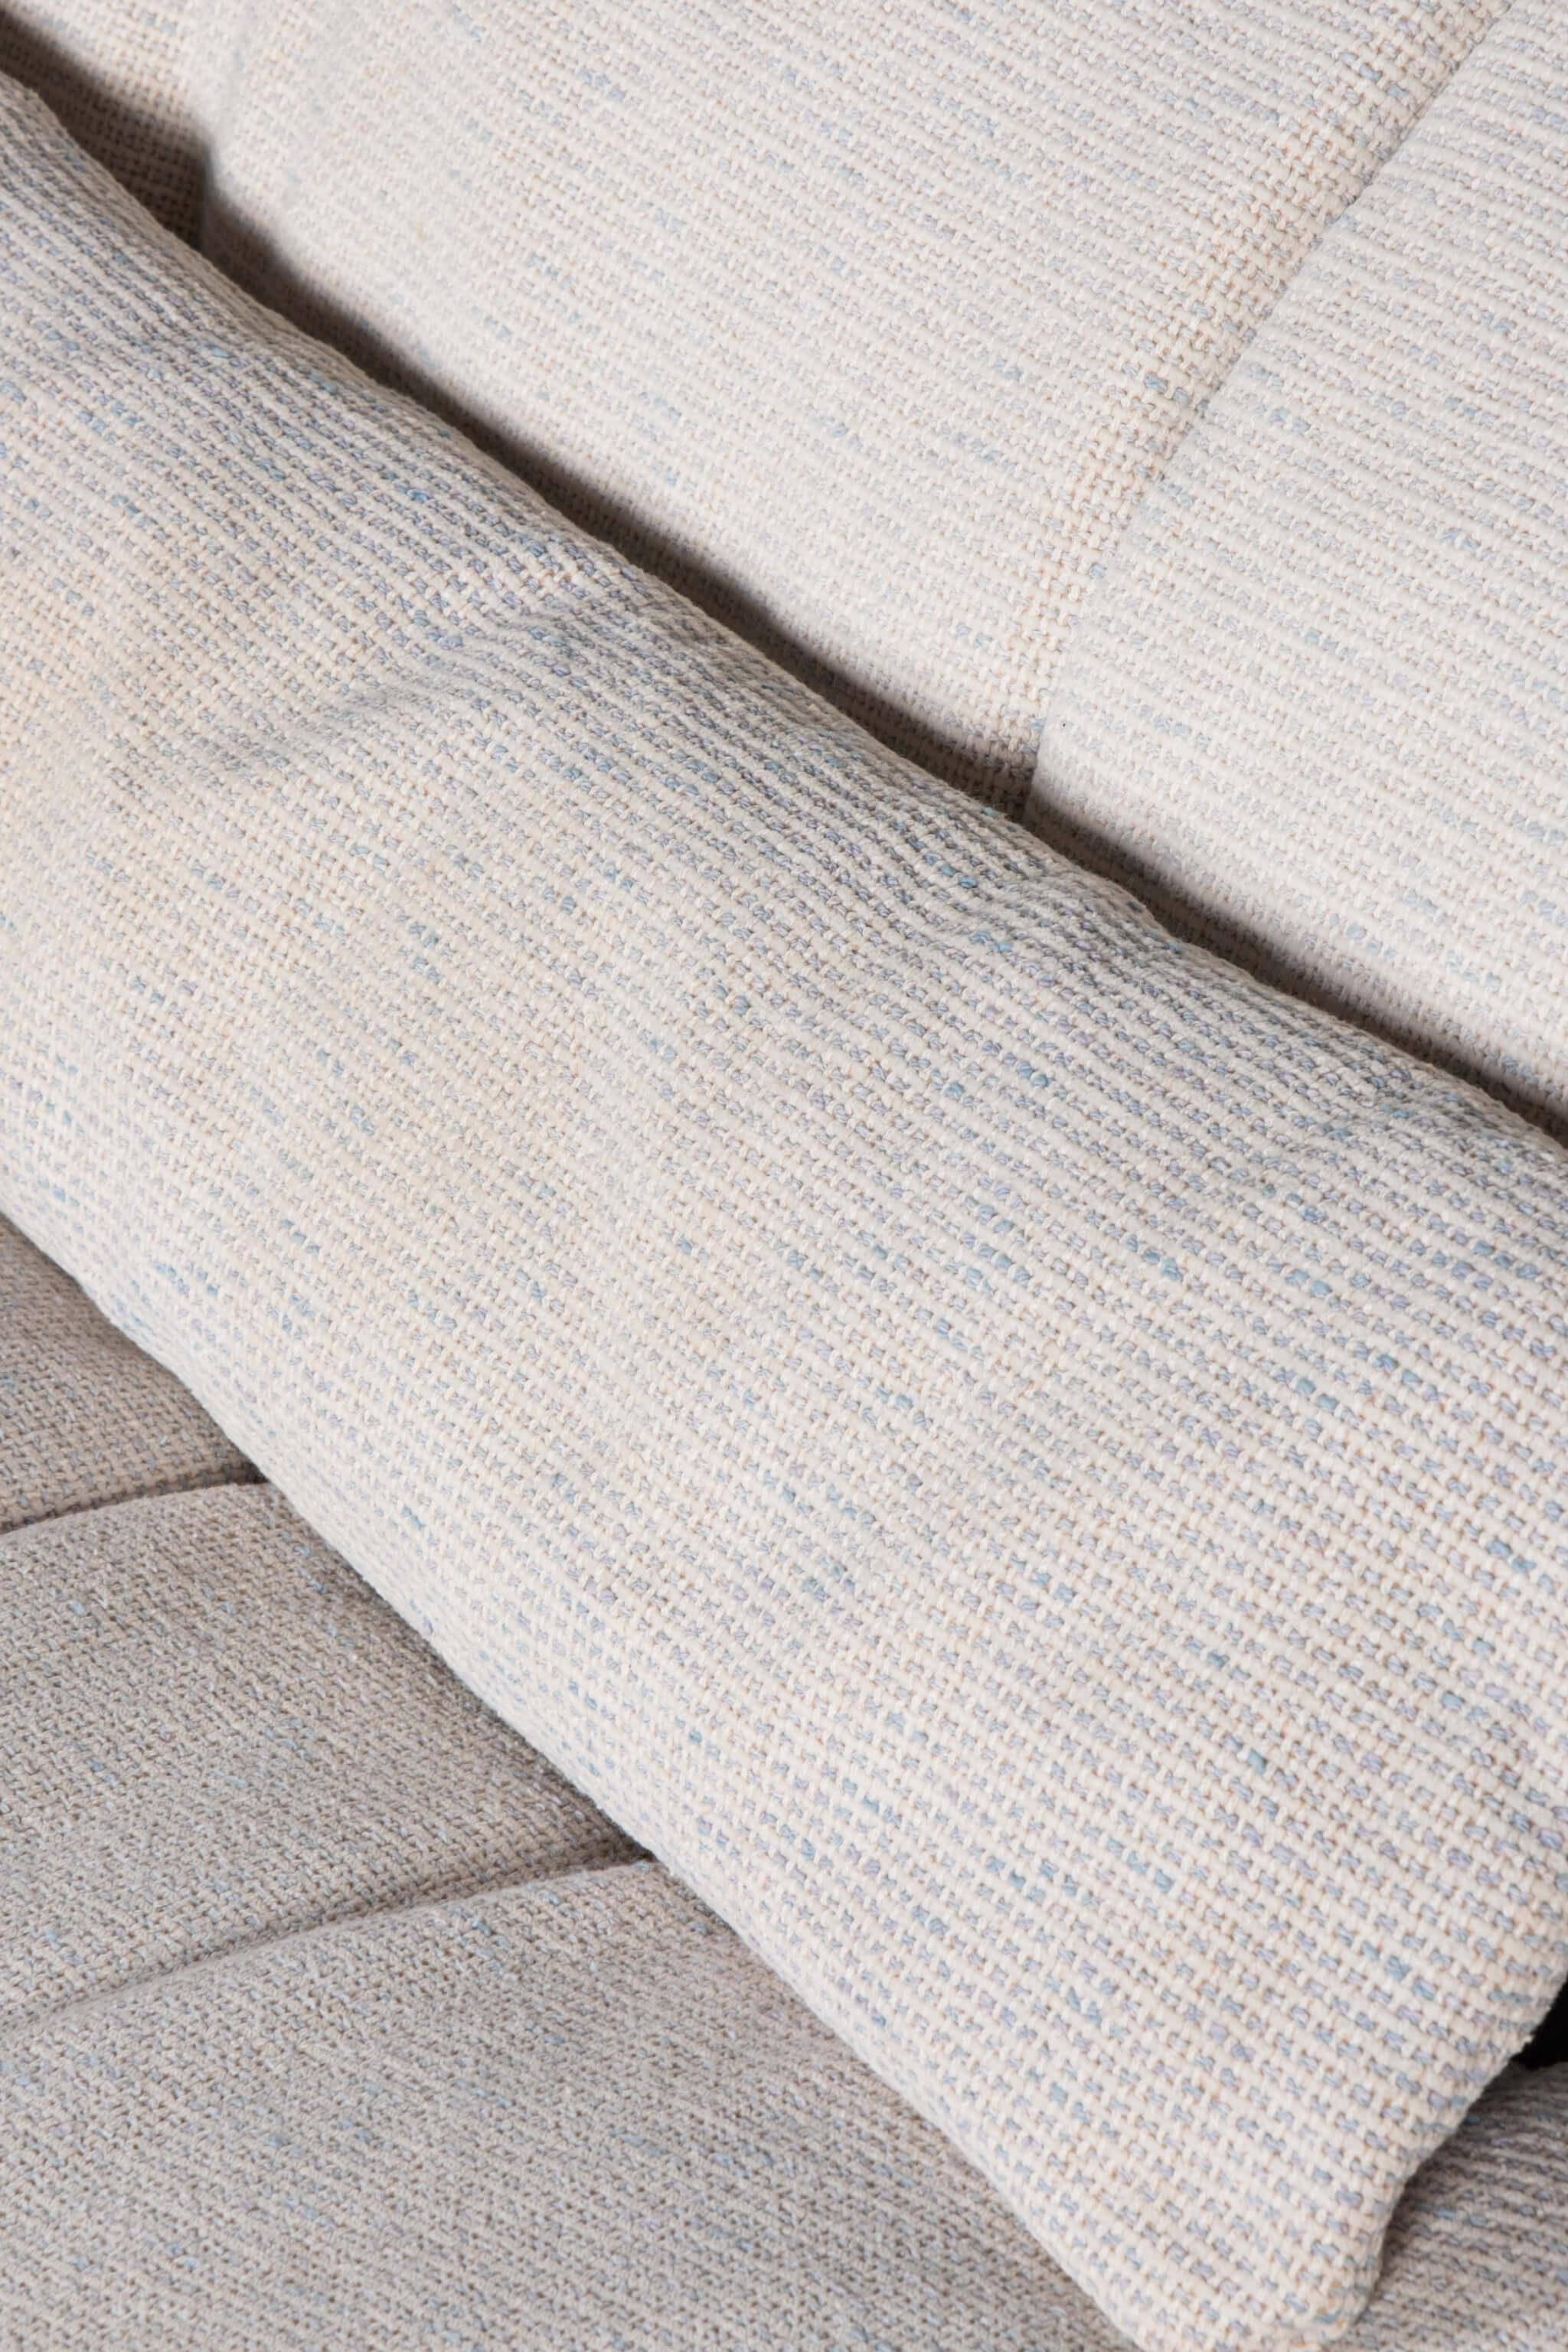 Fabric 1980s 'Plumy' Sofa by Annie Hieronimus for Cinna / Ligne Roset